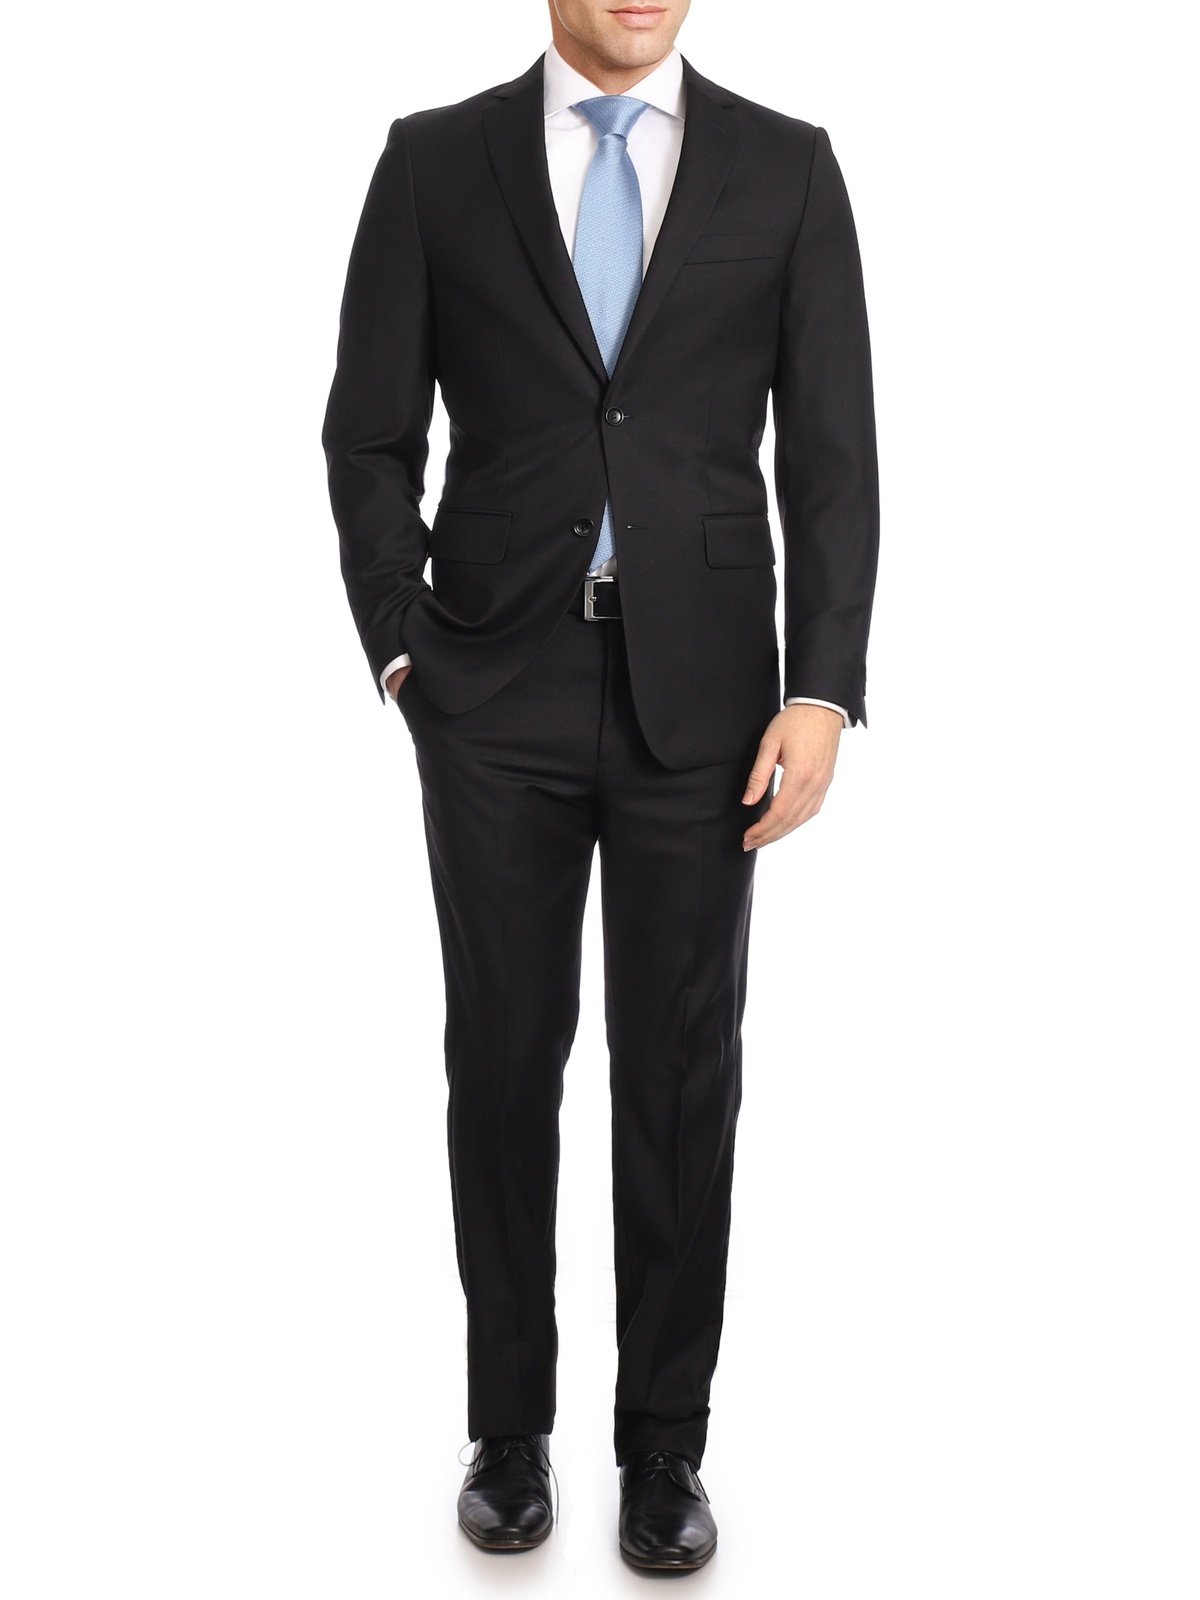 Label M SUITS Label M Mens Classic Fit Solid Black Two Button 100% Wool Wrinkle Resistant Suit